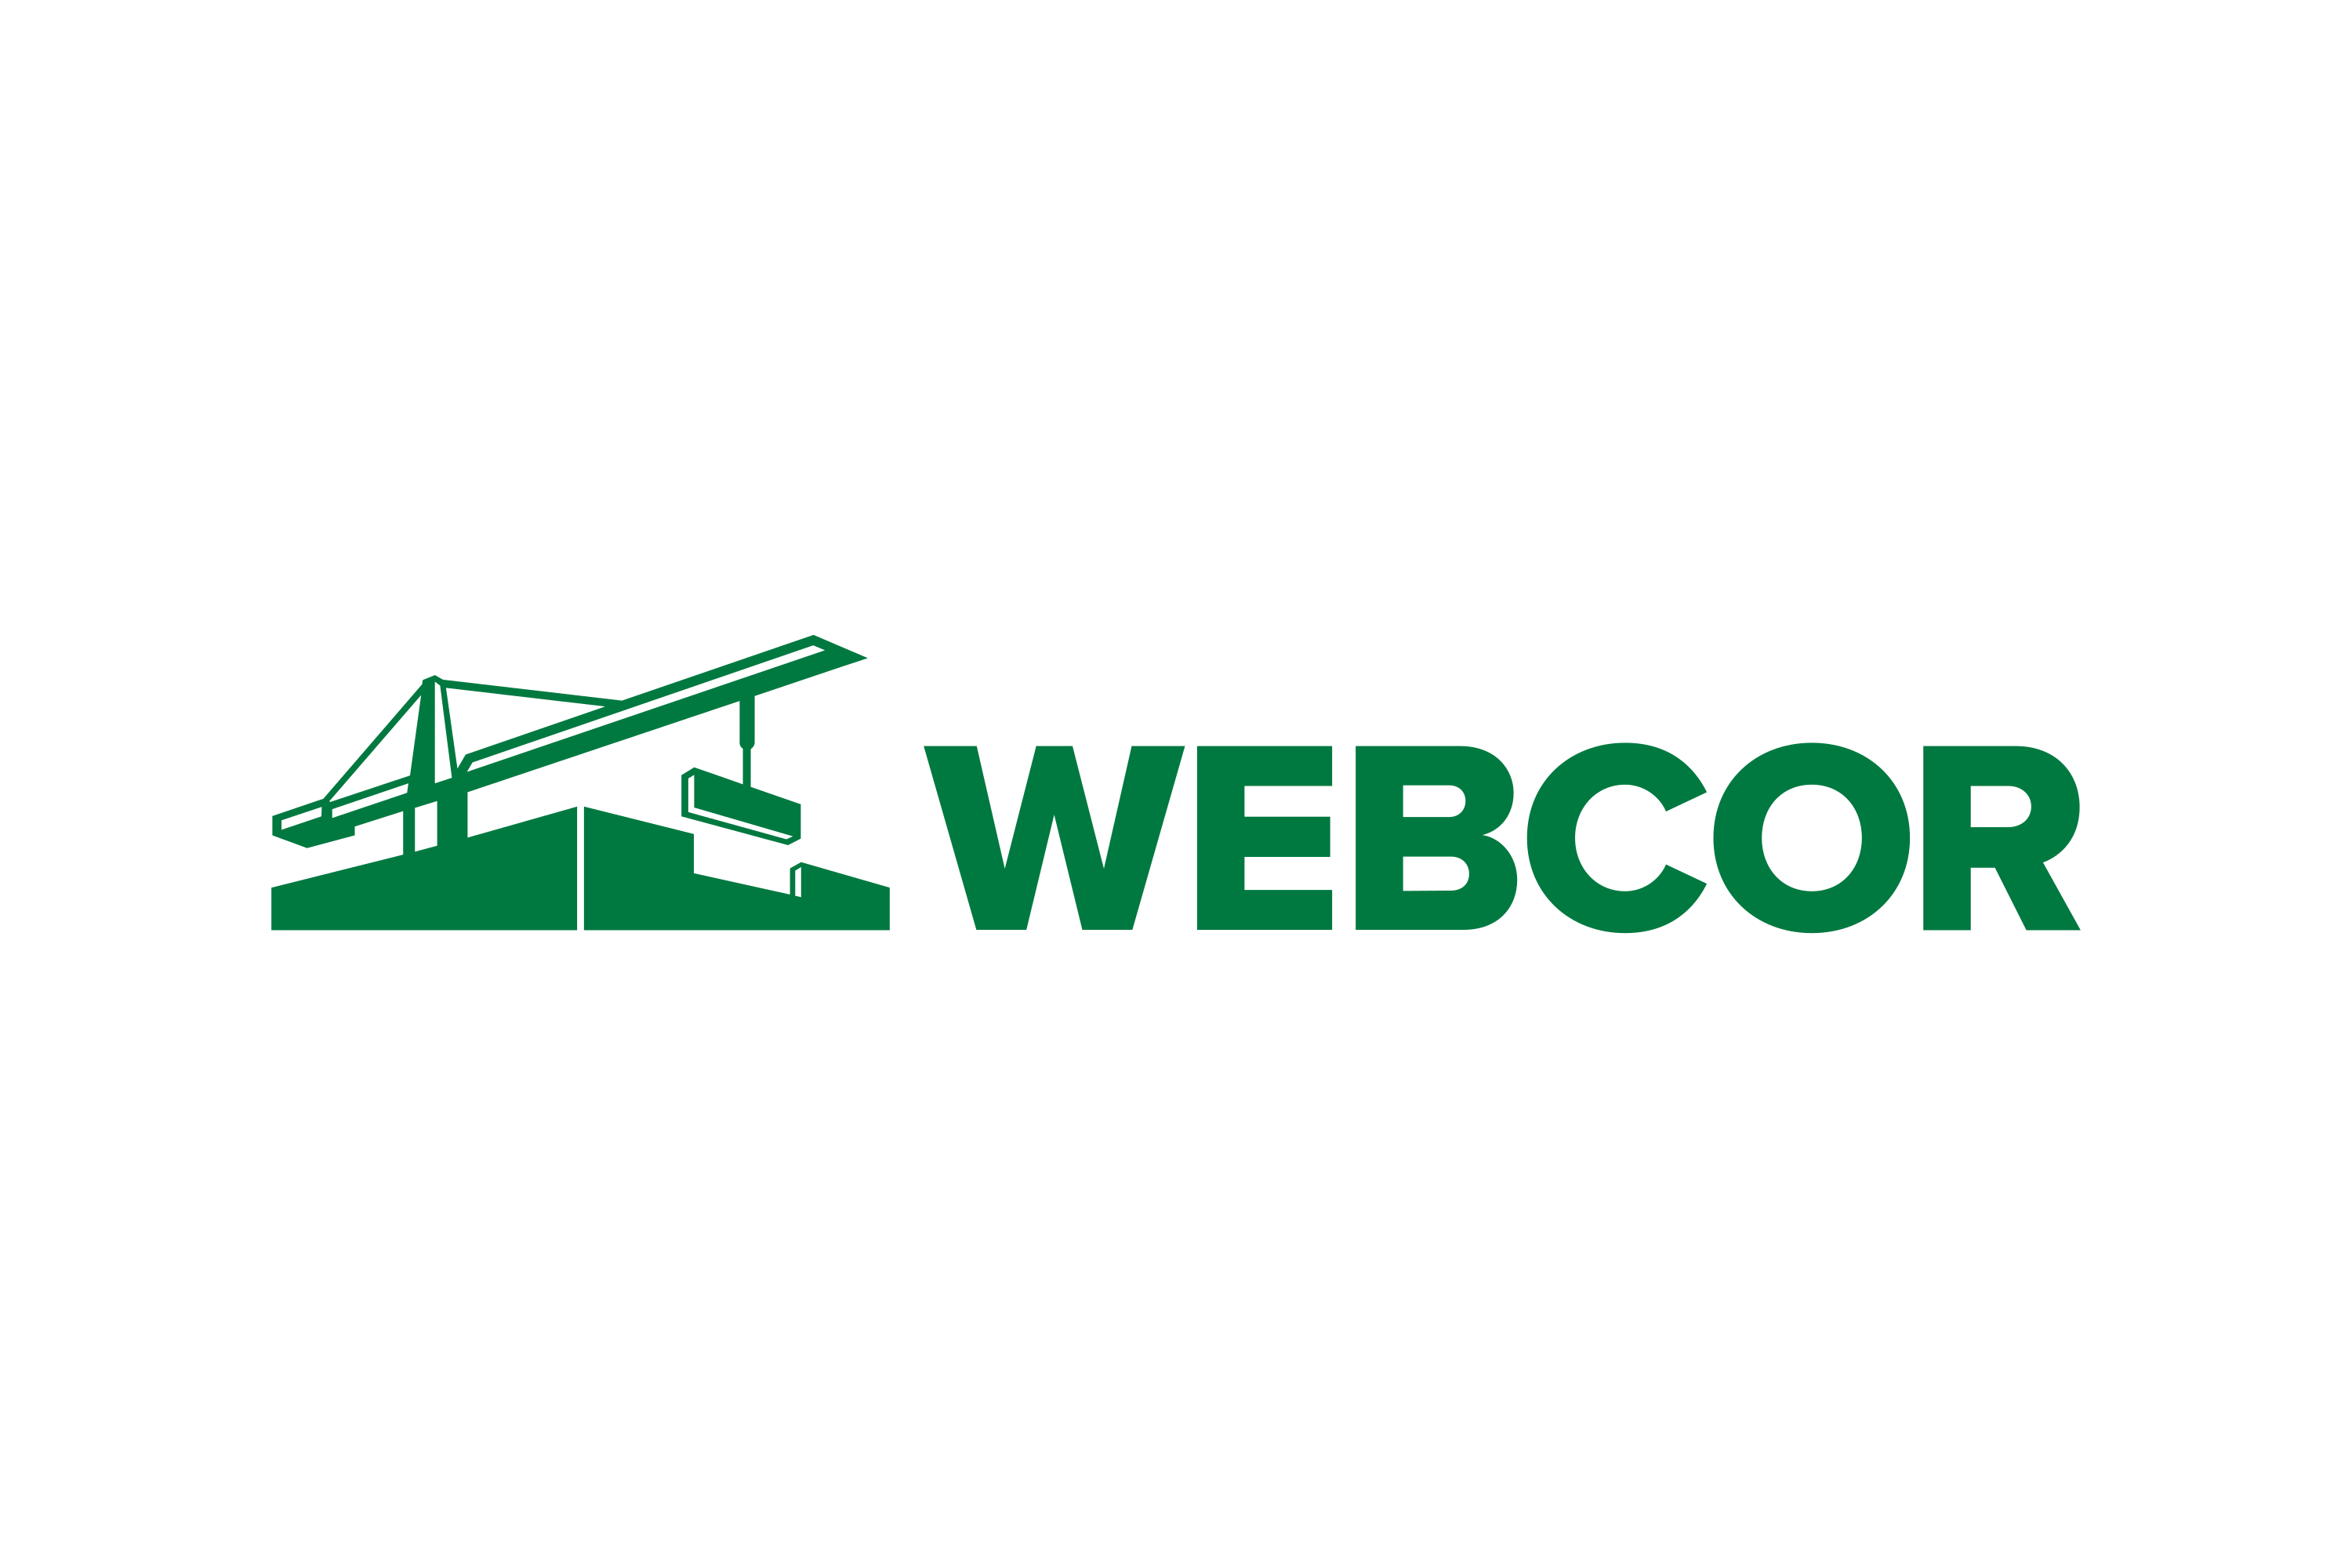 Download Webcor Builders Logo in SVG Vector or PNG File Format - Logo.wine